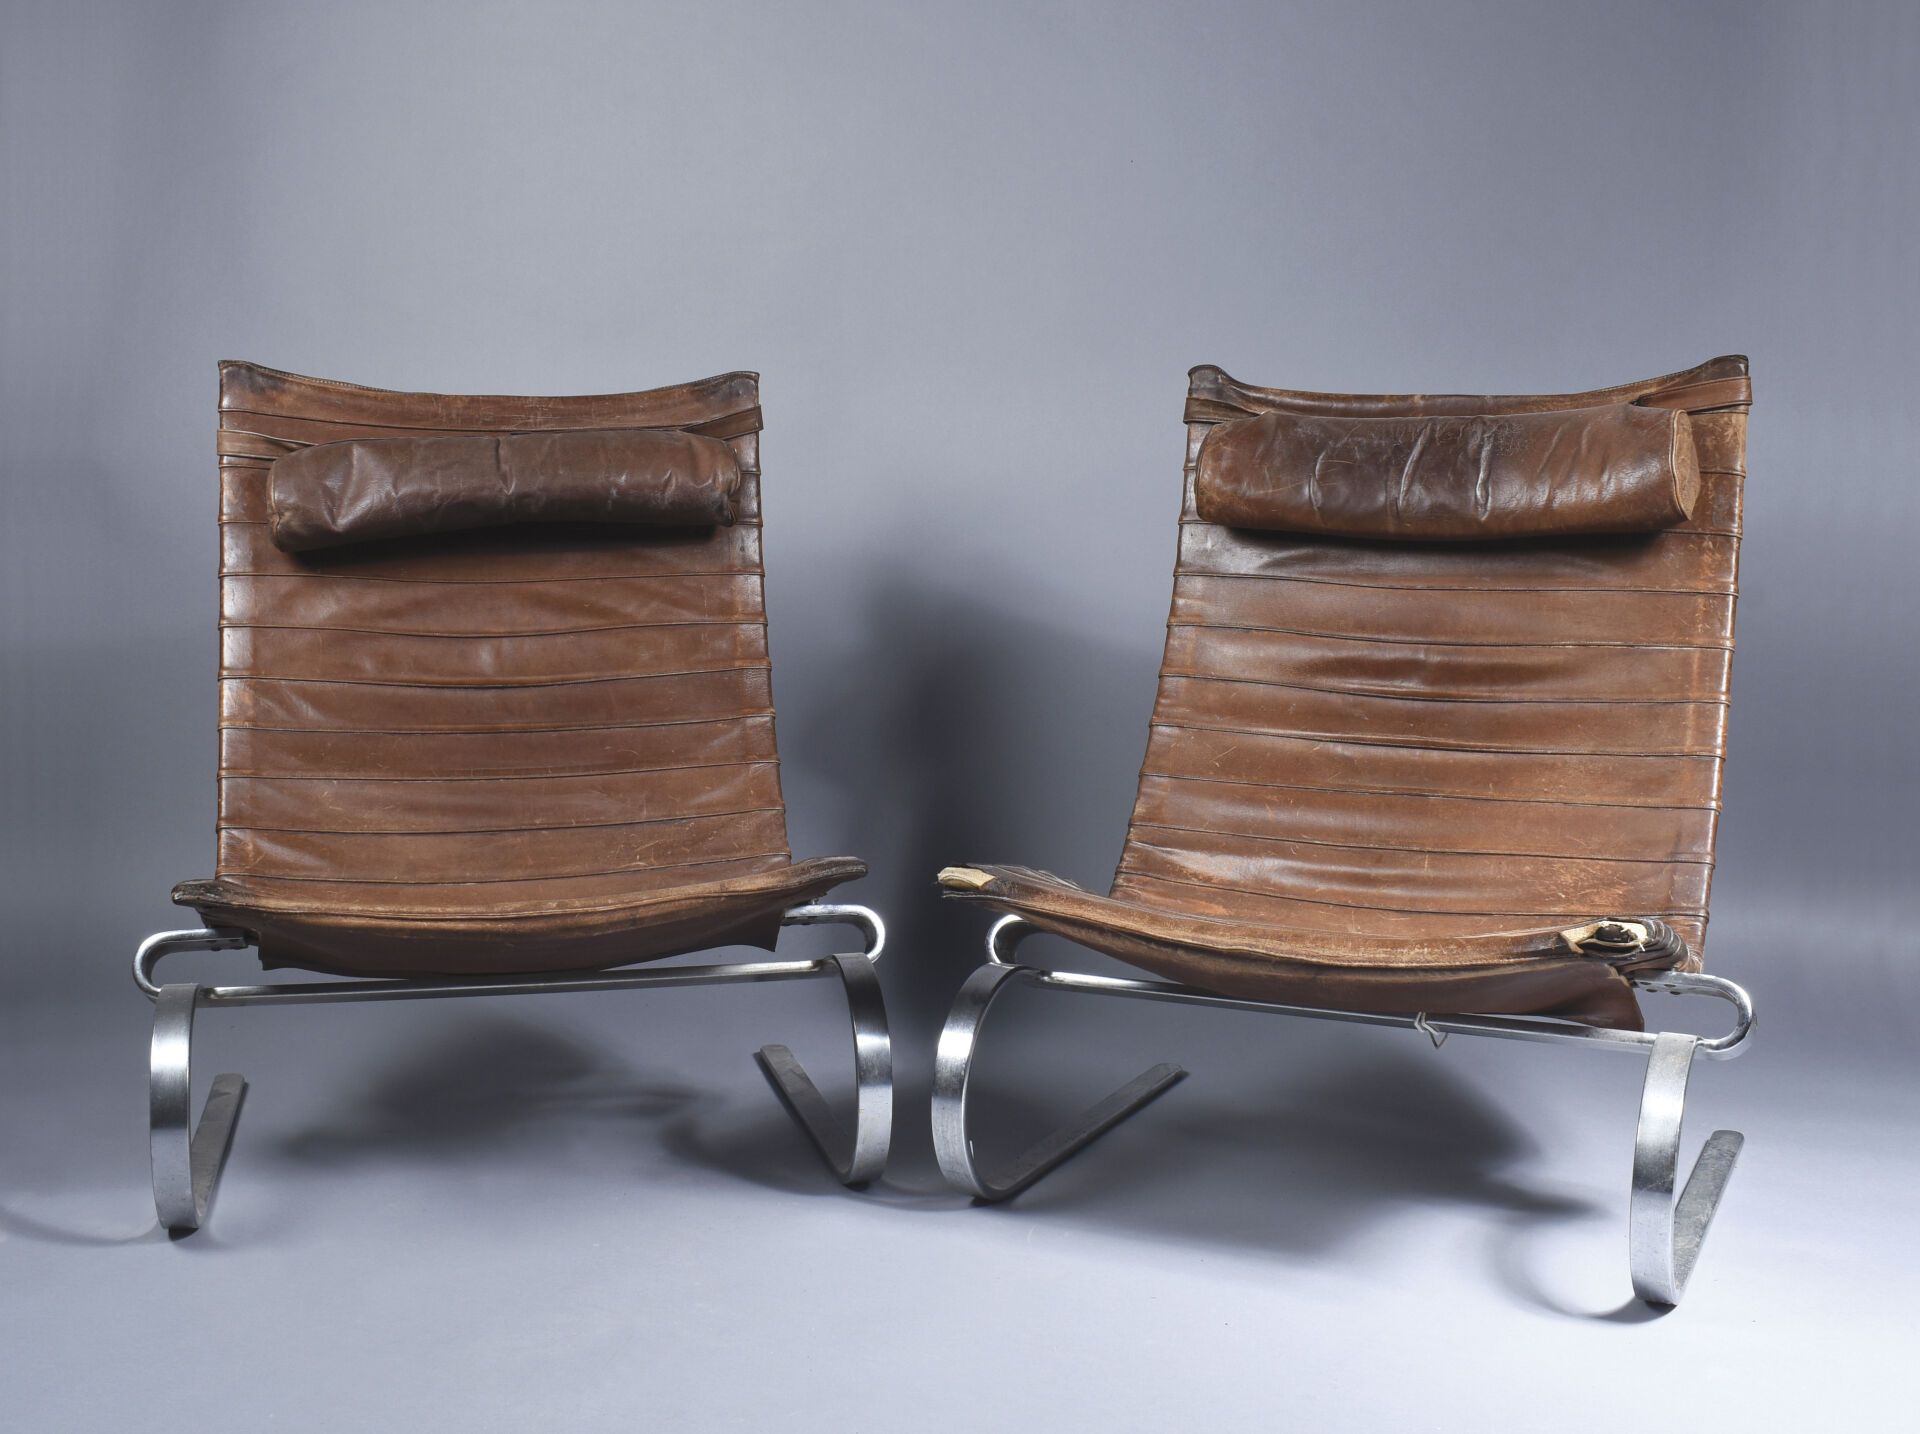 Null KJAERHOLM Poul（1929-1980 年） - KOLD CHRISTENSEN 出版社
"PK20 
一对高背扶手椅，白兰地色皮革头枕靠&hellip;